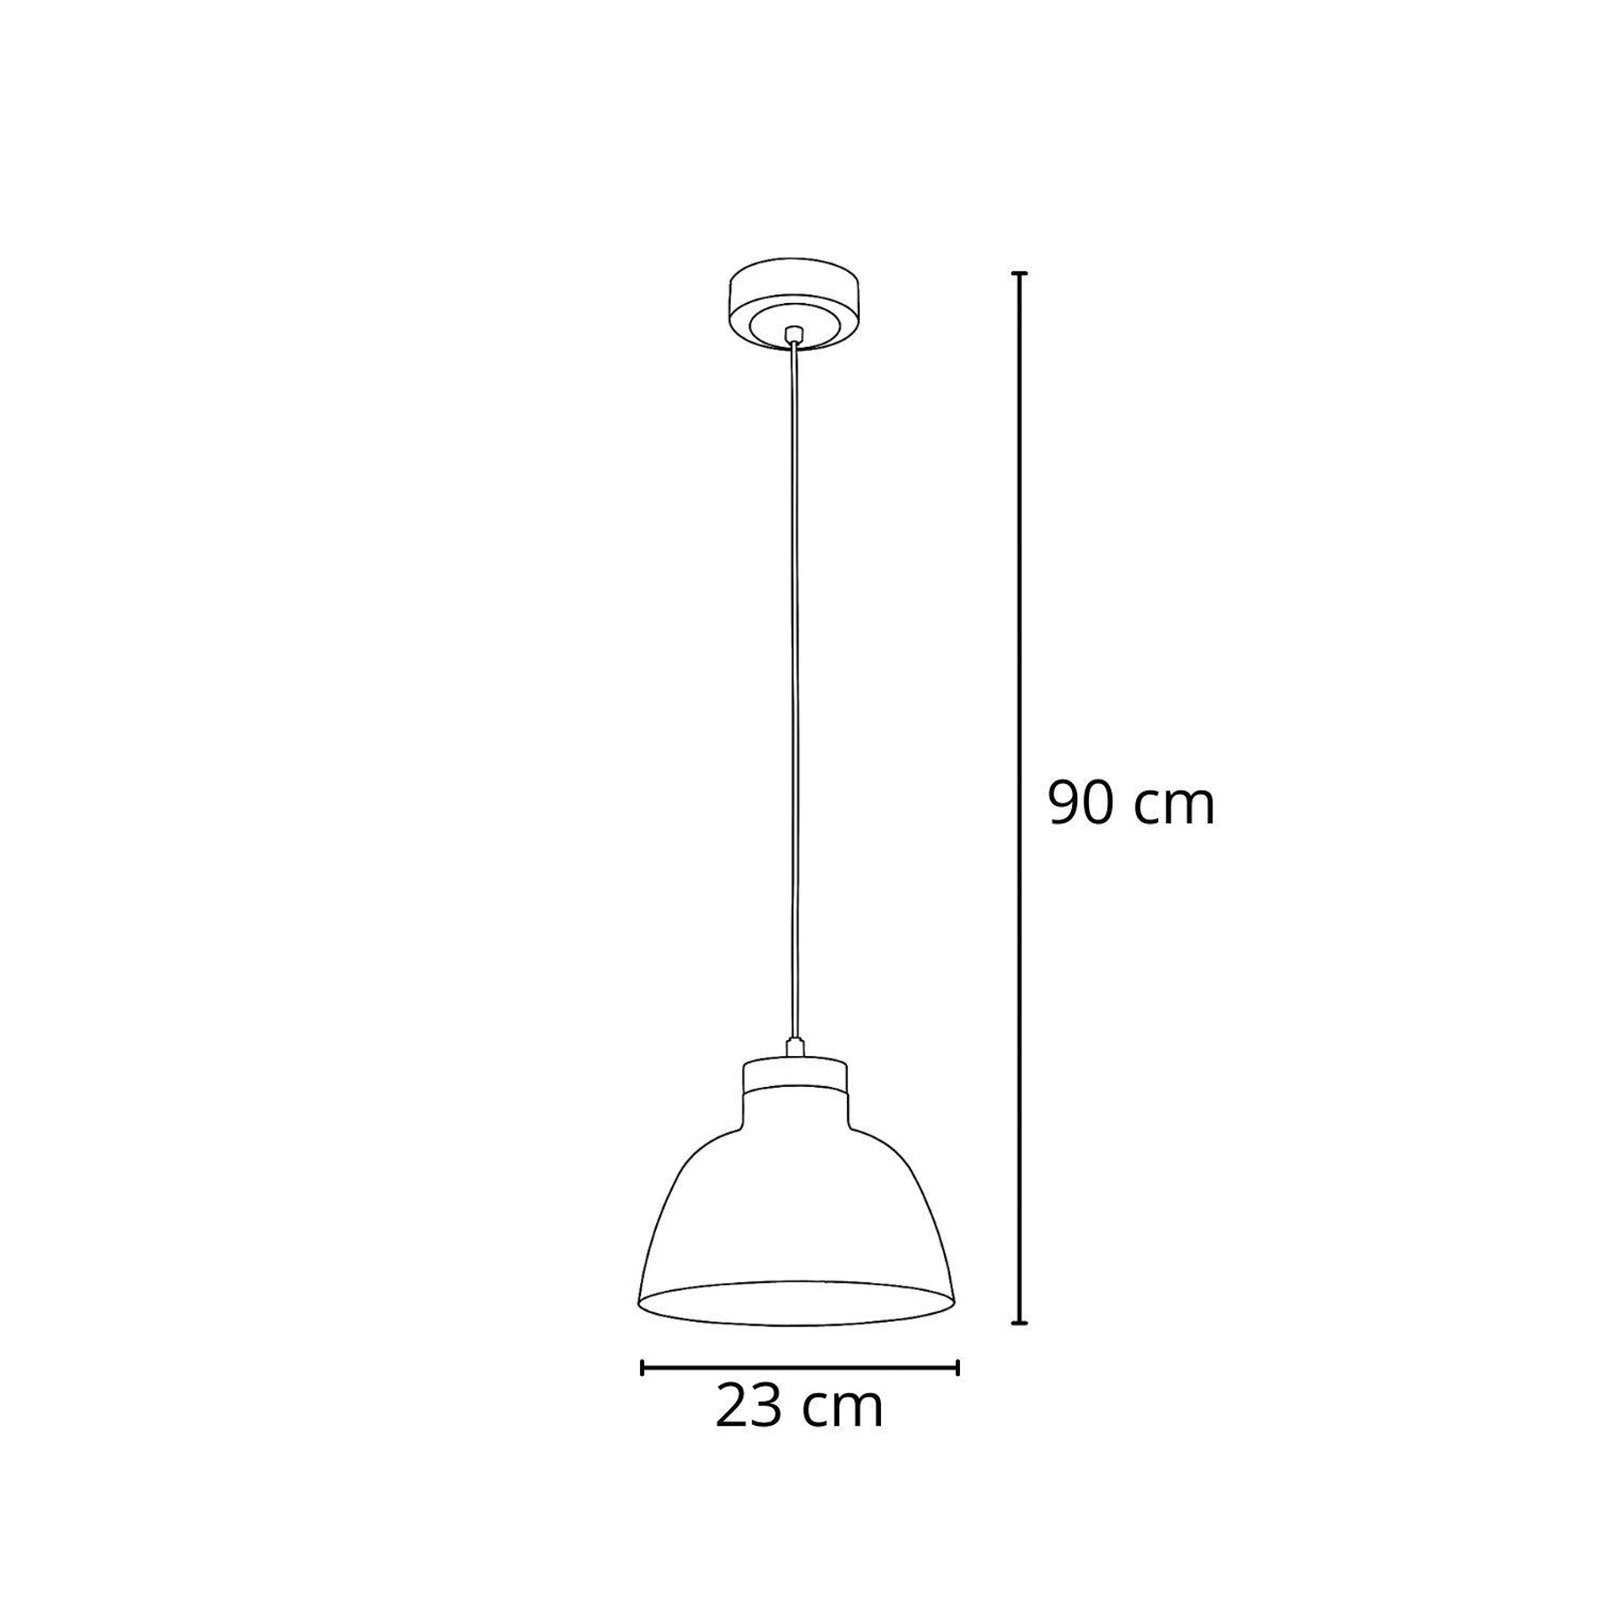 Hanglamp Lorien, donkergroen, Ø 23 cm, metaal, hout